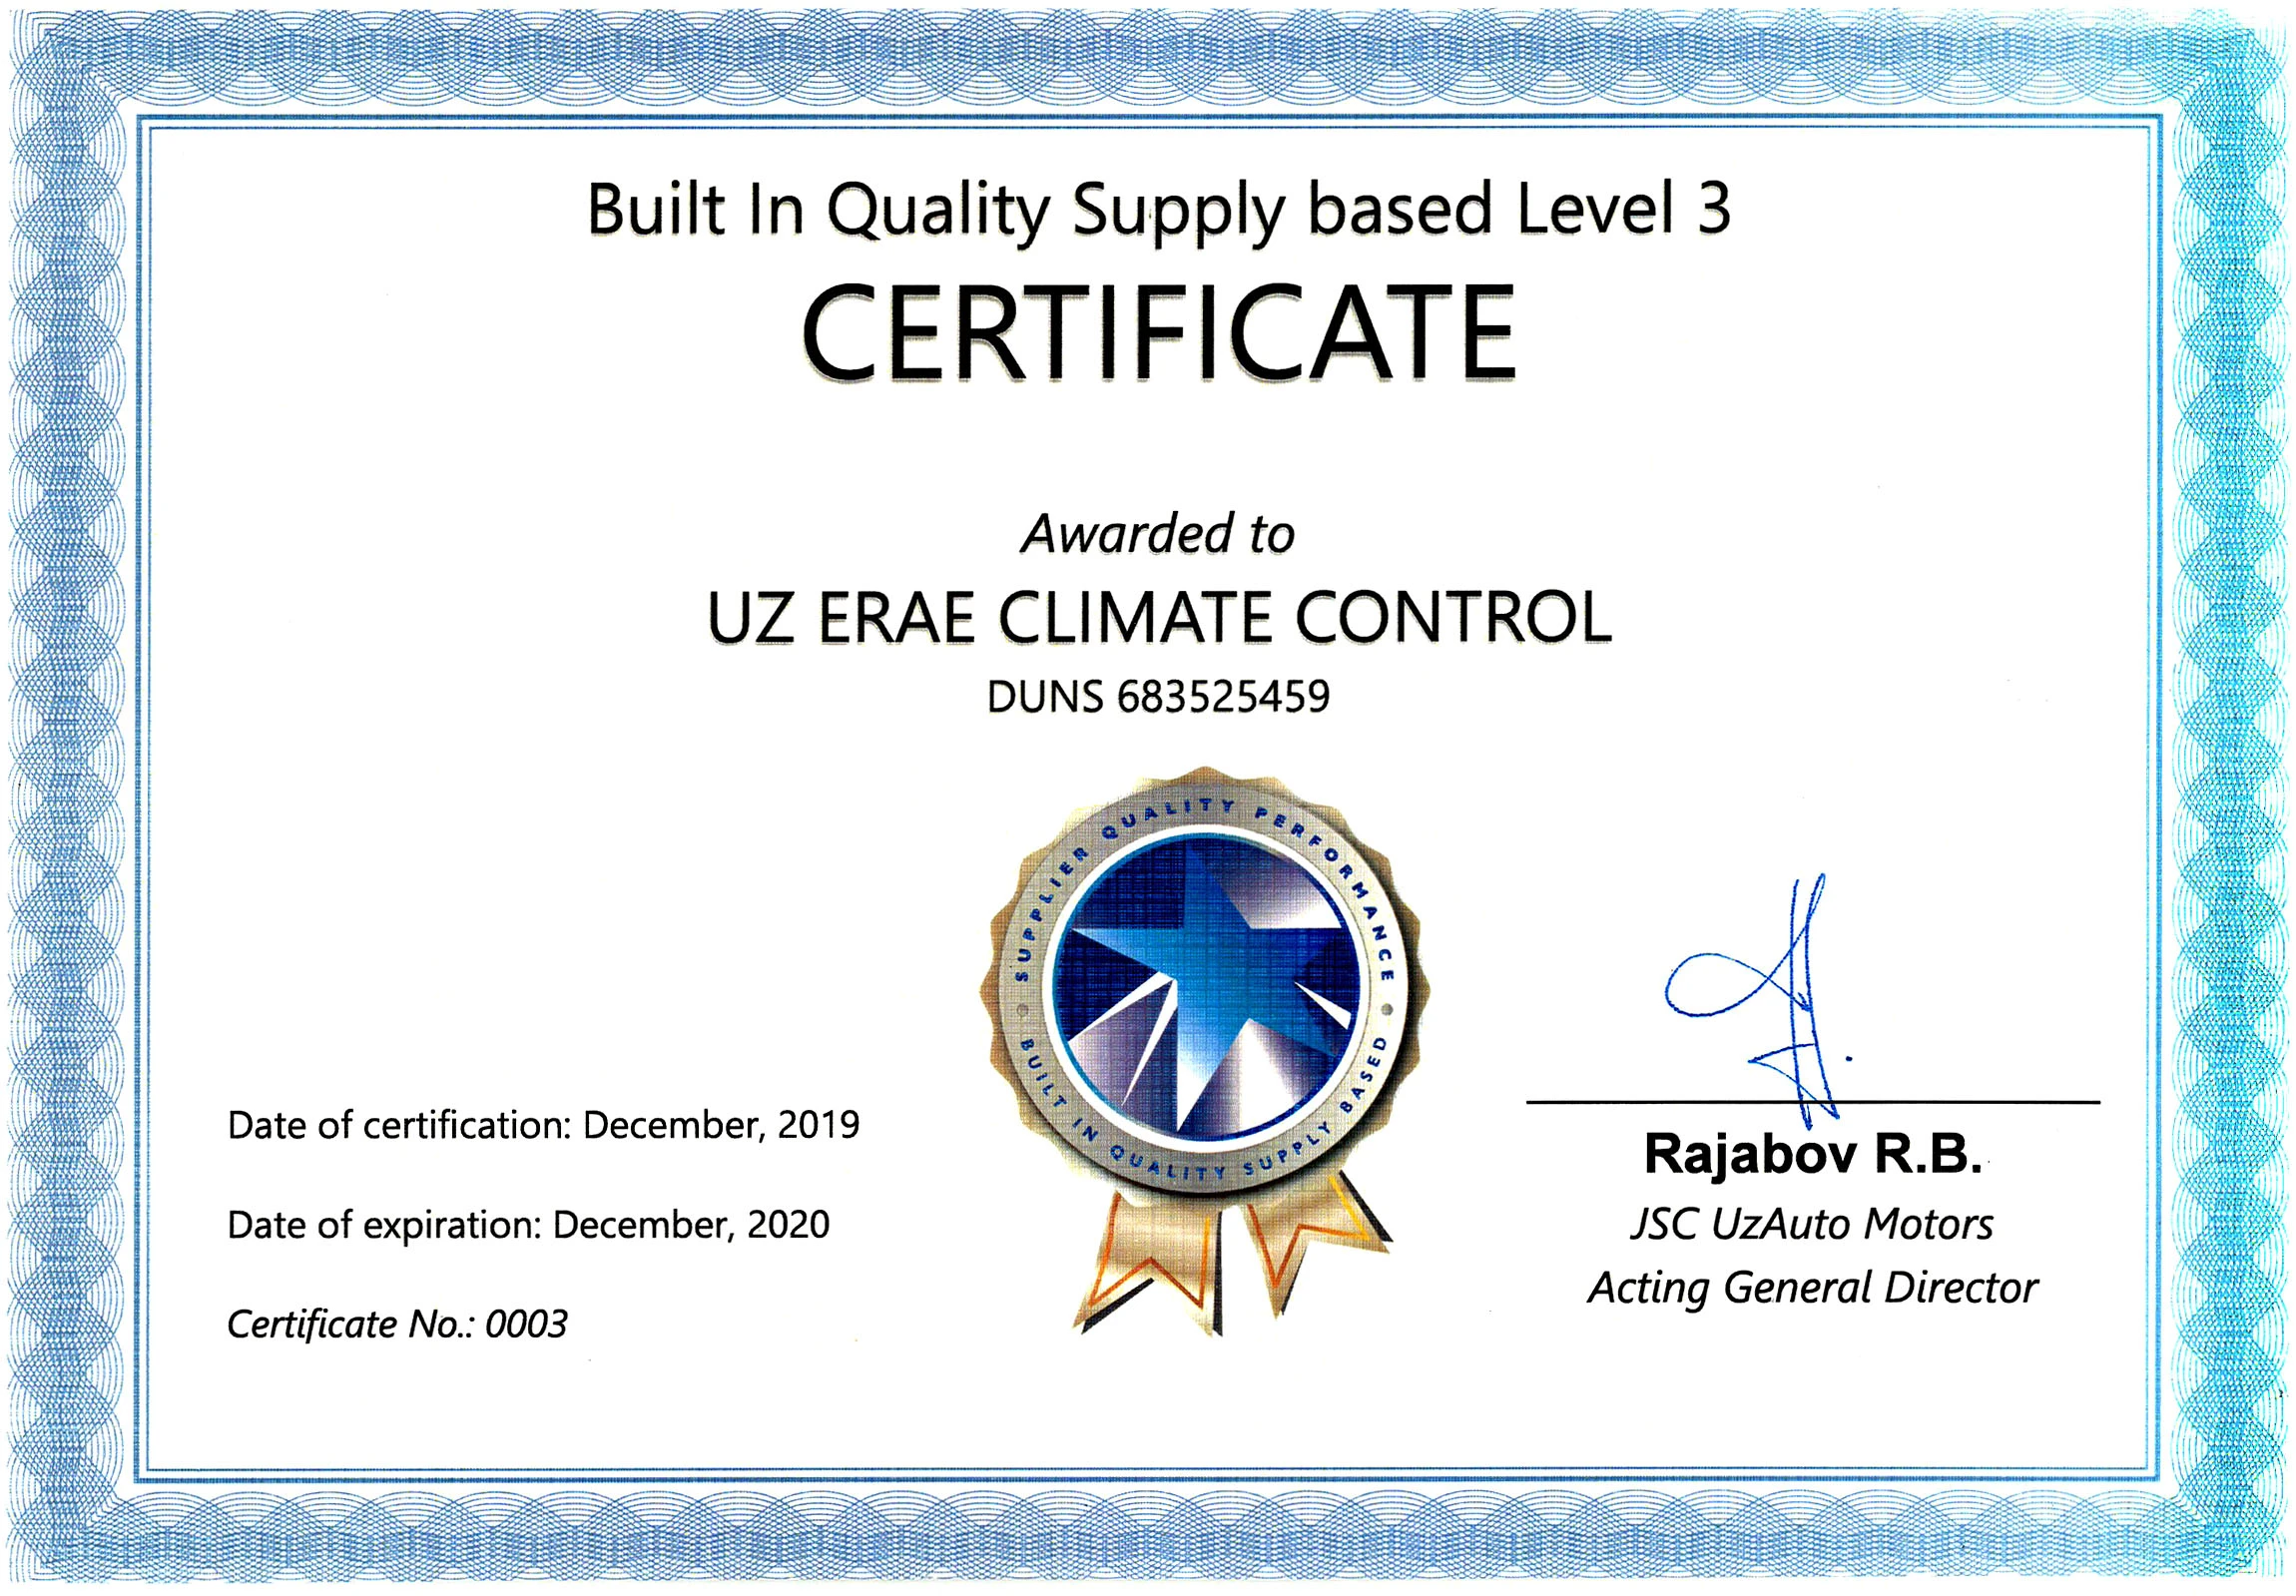 UzAuto Motors вручил Сертификат качества 3 уровня.